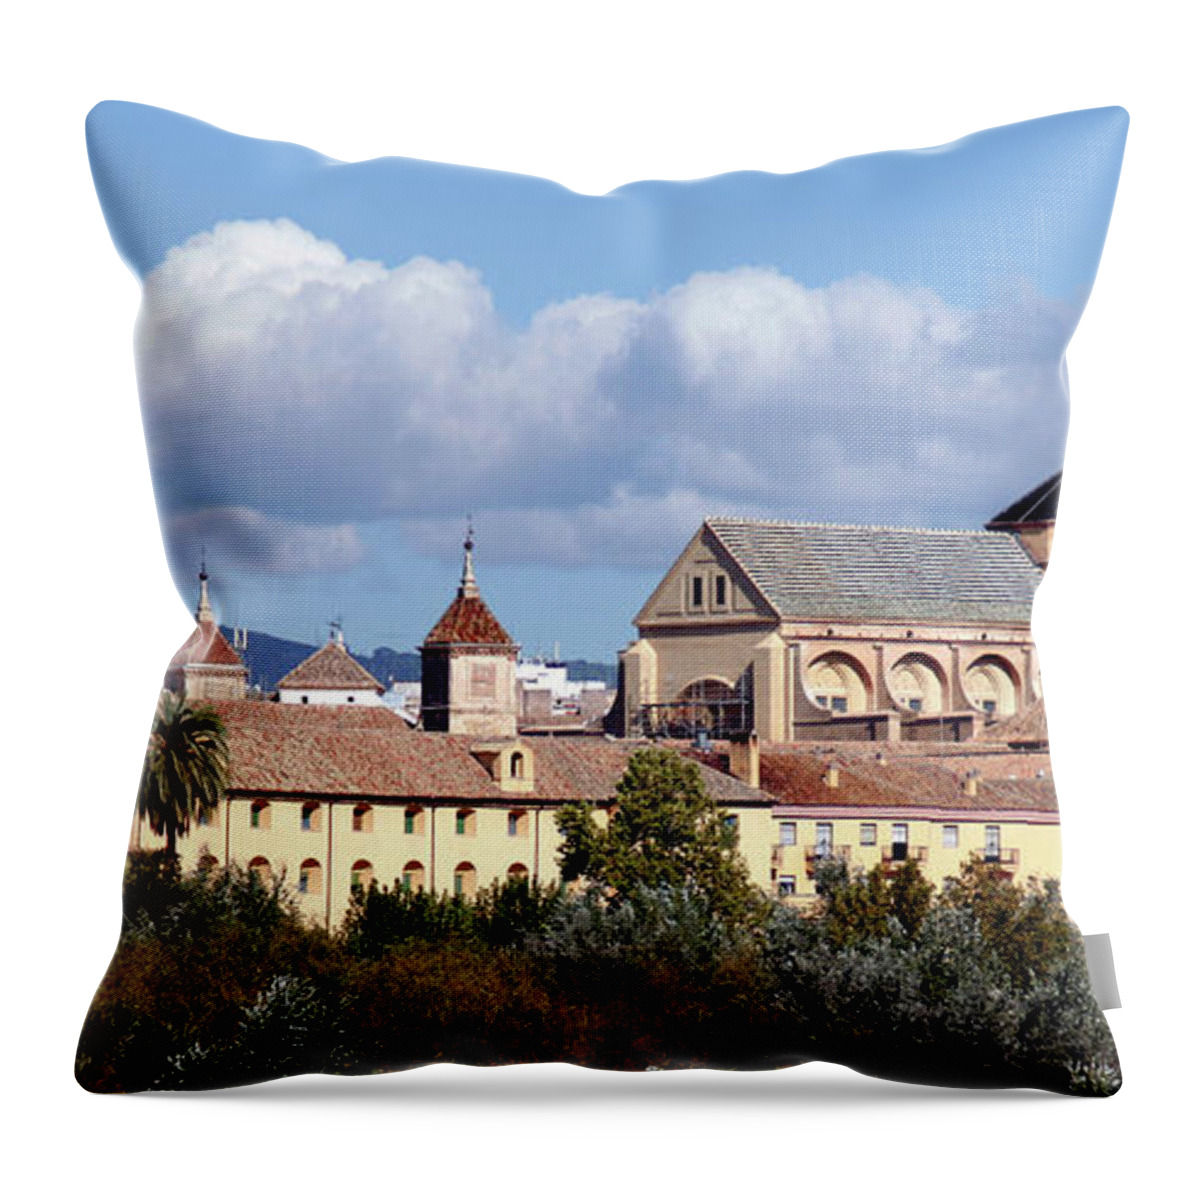 Cordoba Throw Pillow featuring the photograph Cordoba, Spain - Old City by Richard Krebs